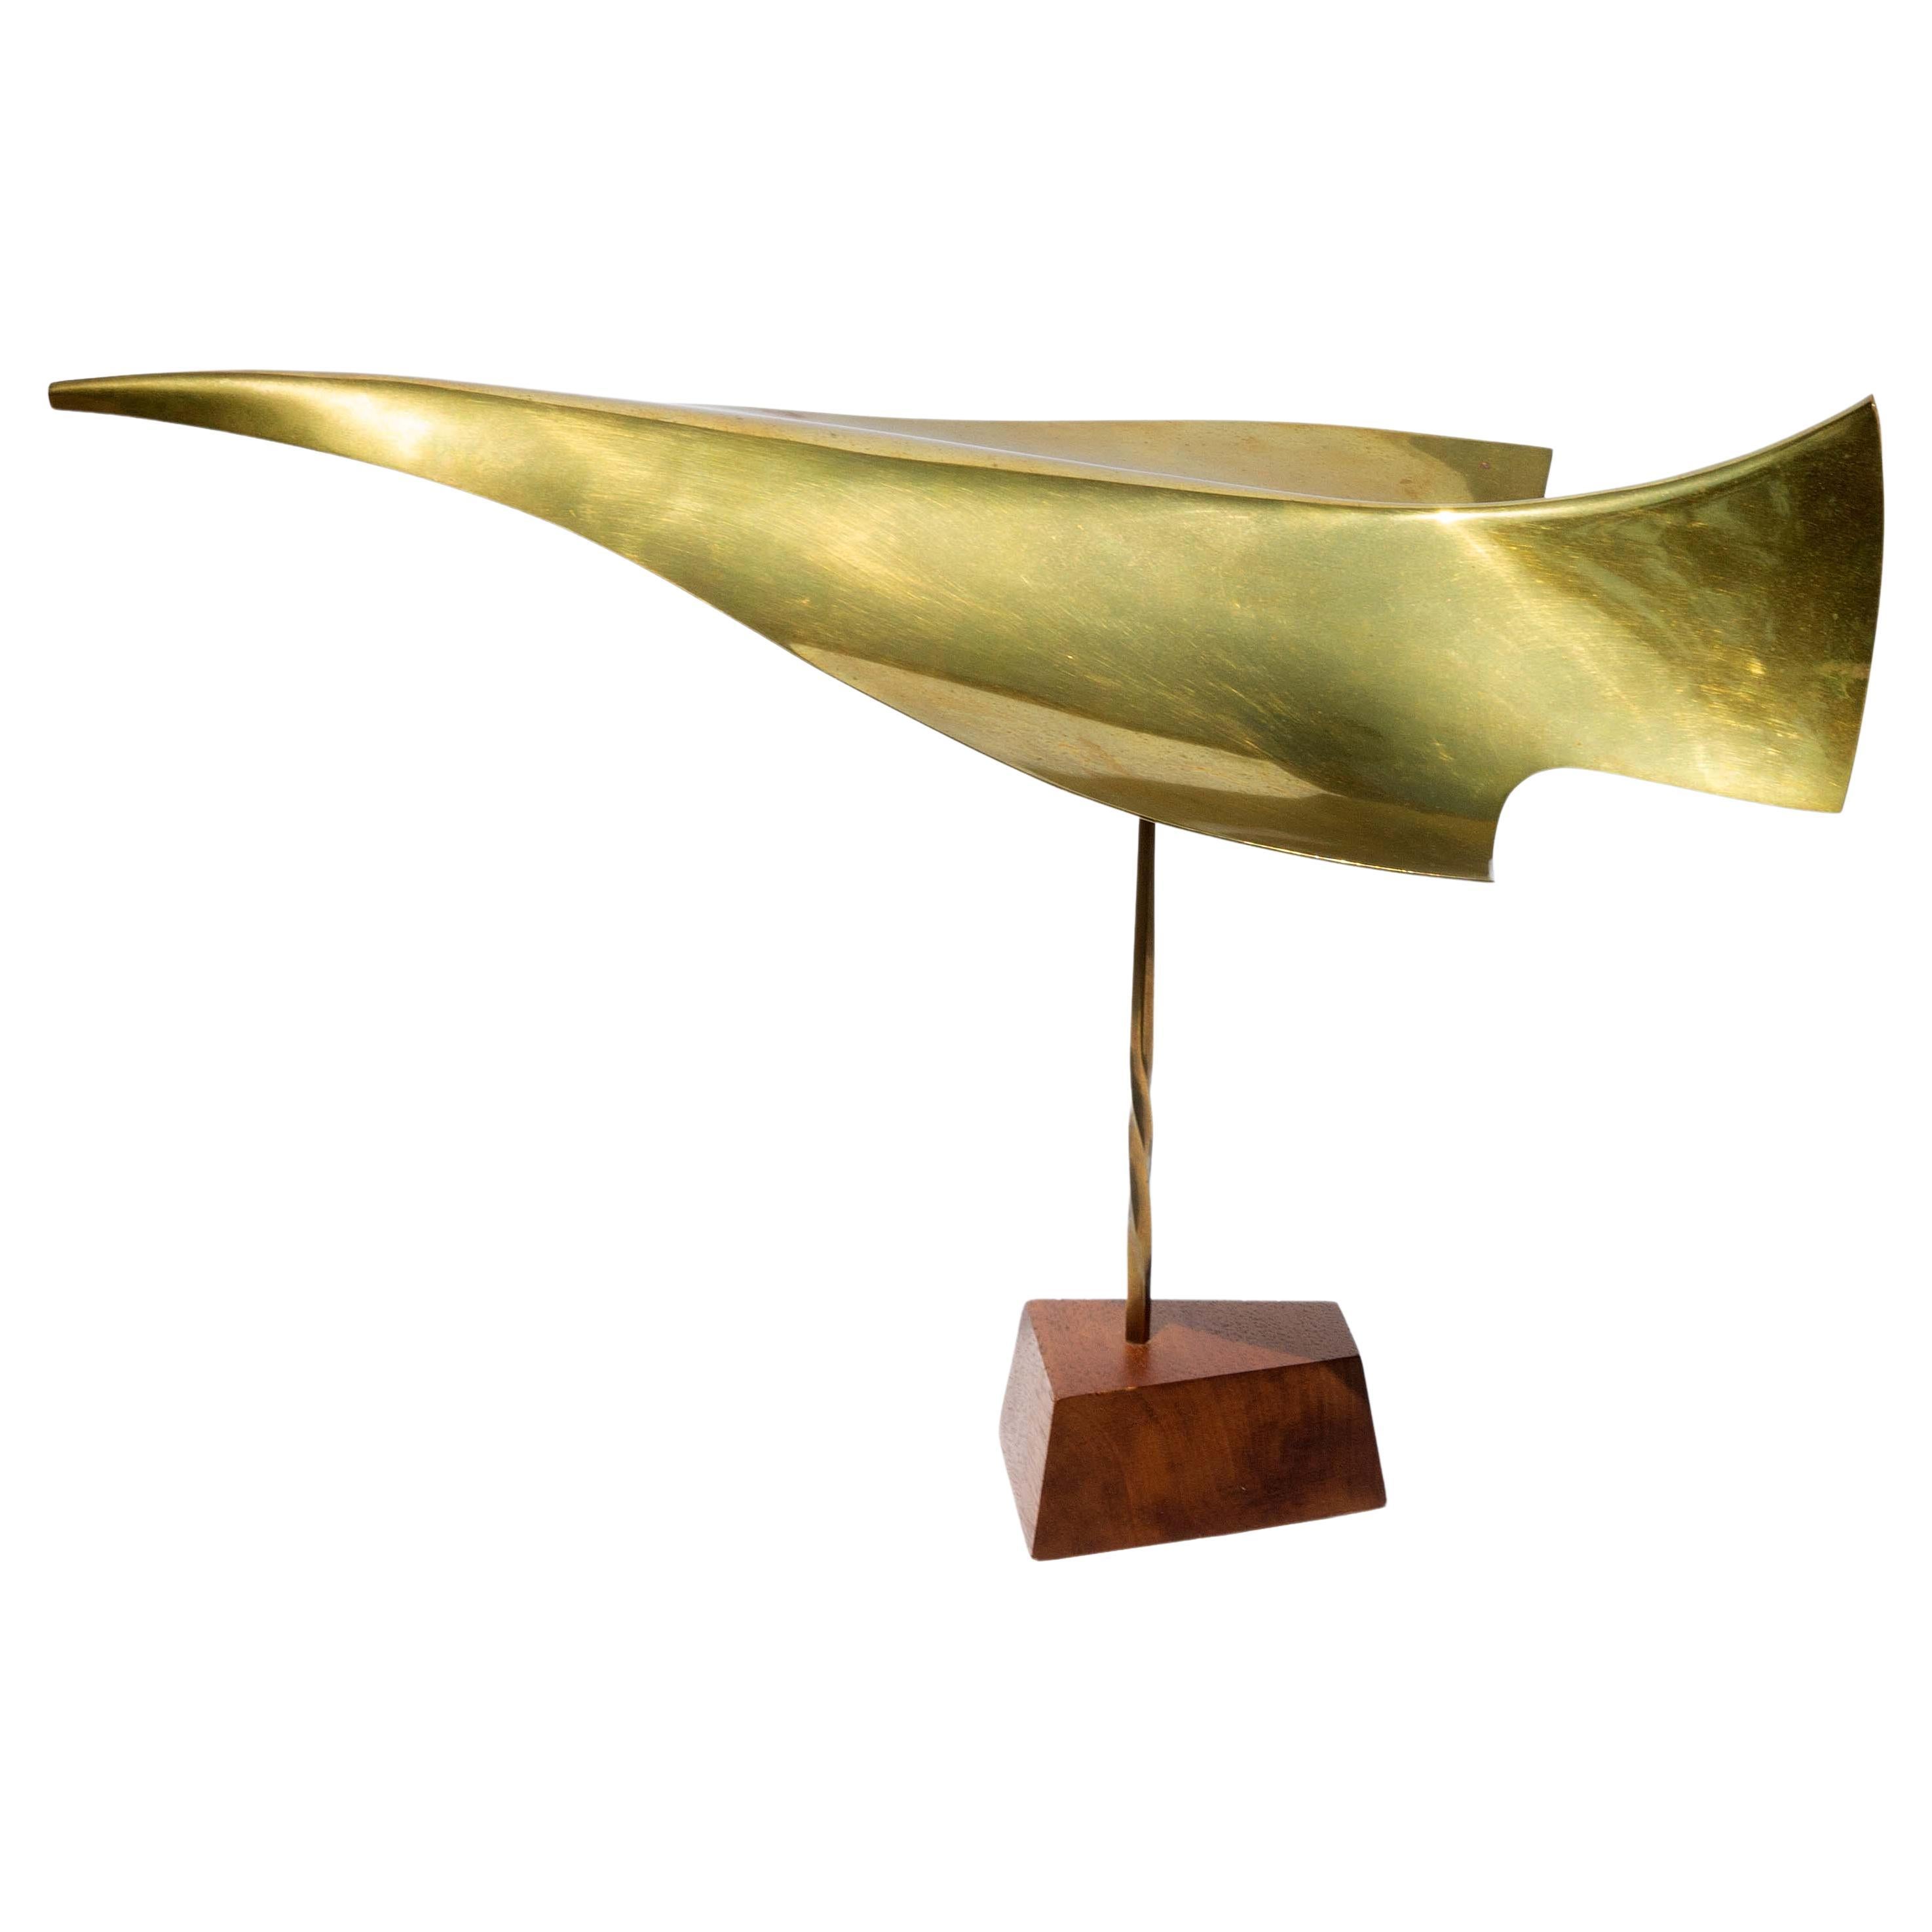 Hans Christensen Hammered Brass Mobile Kinetic Sculpture "Flight"